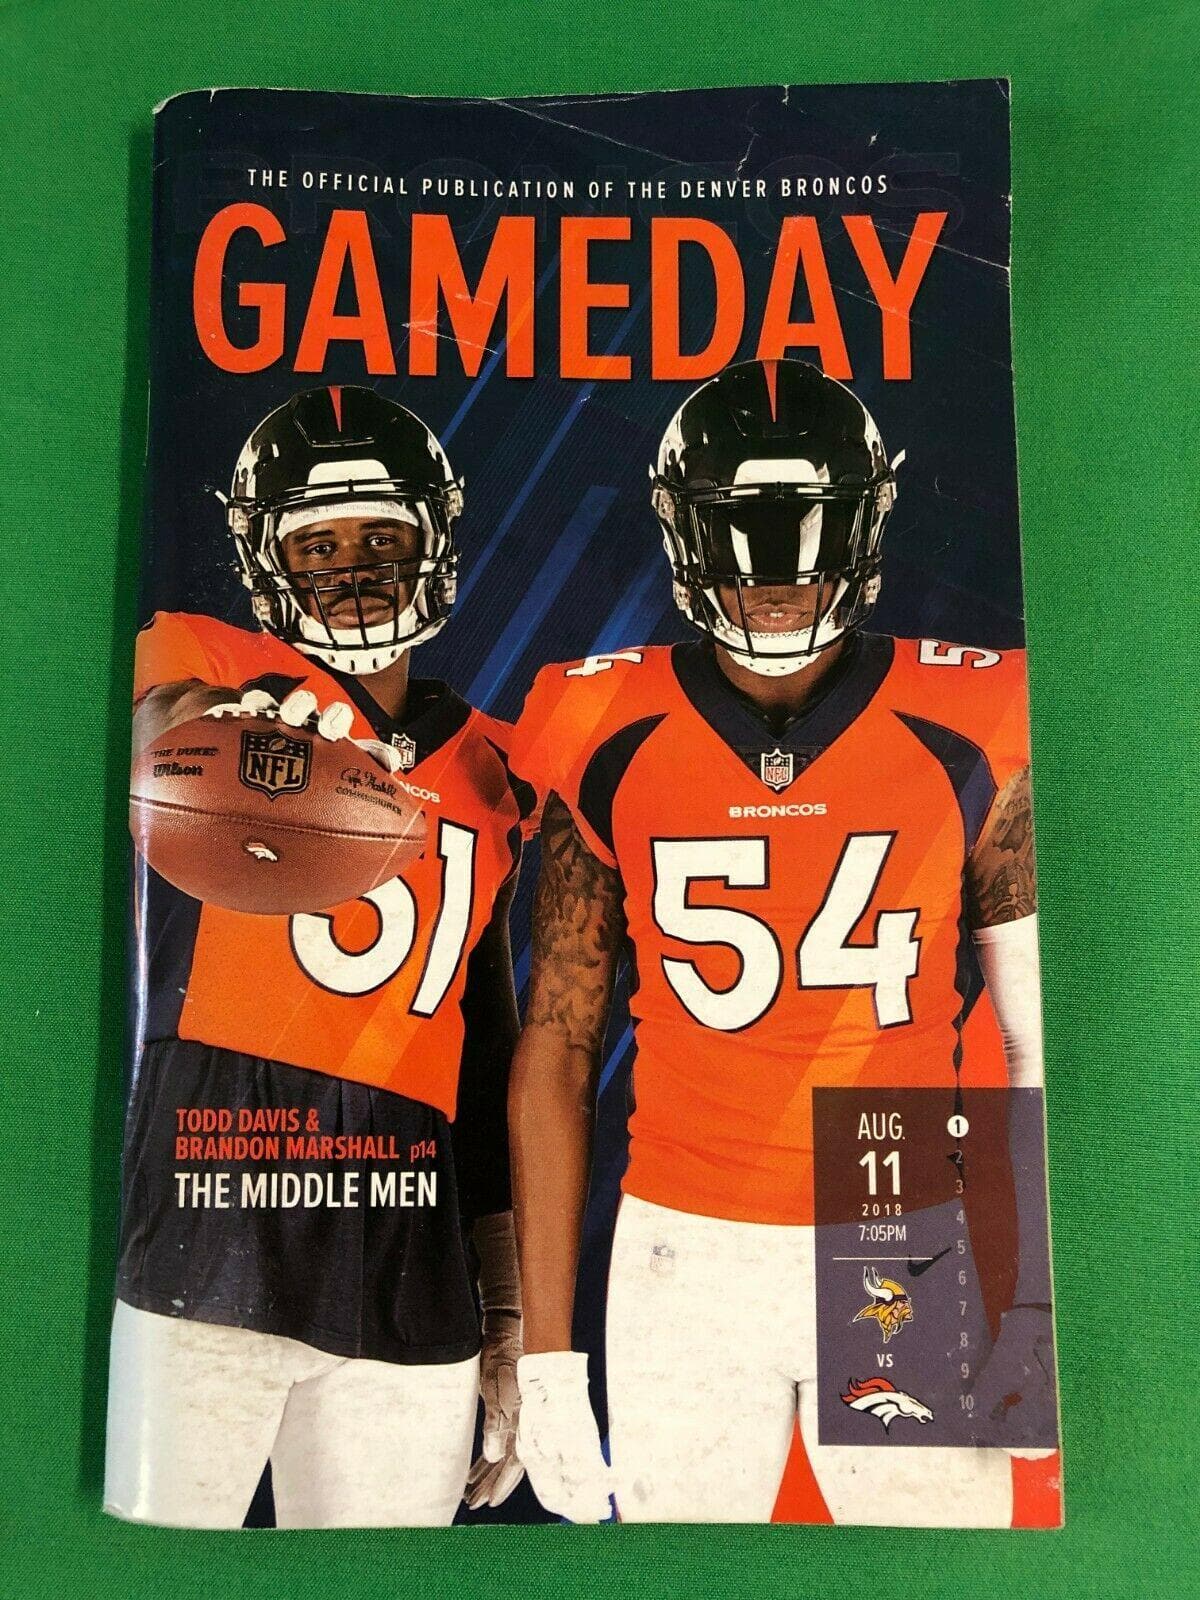 NFL Denver Broncos v. Vikings Davis Marshall 11-8-18 Gameday Magazine